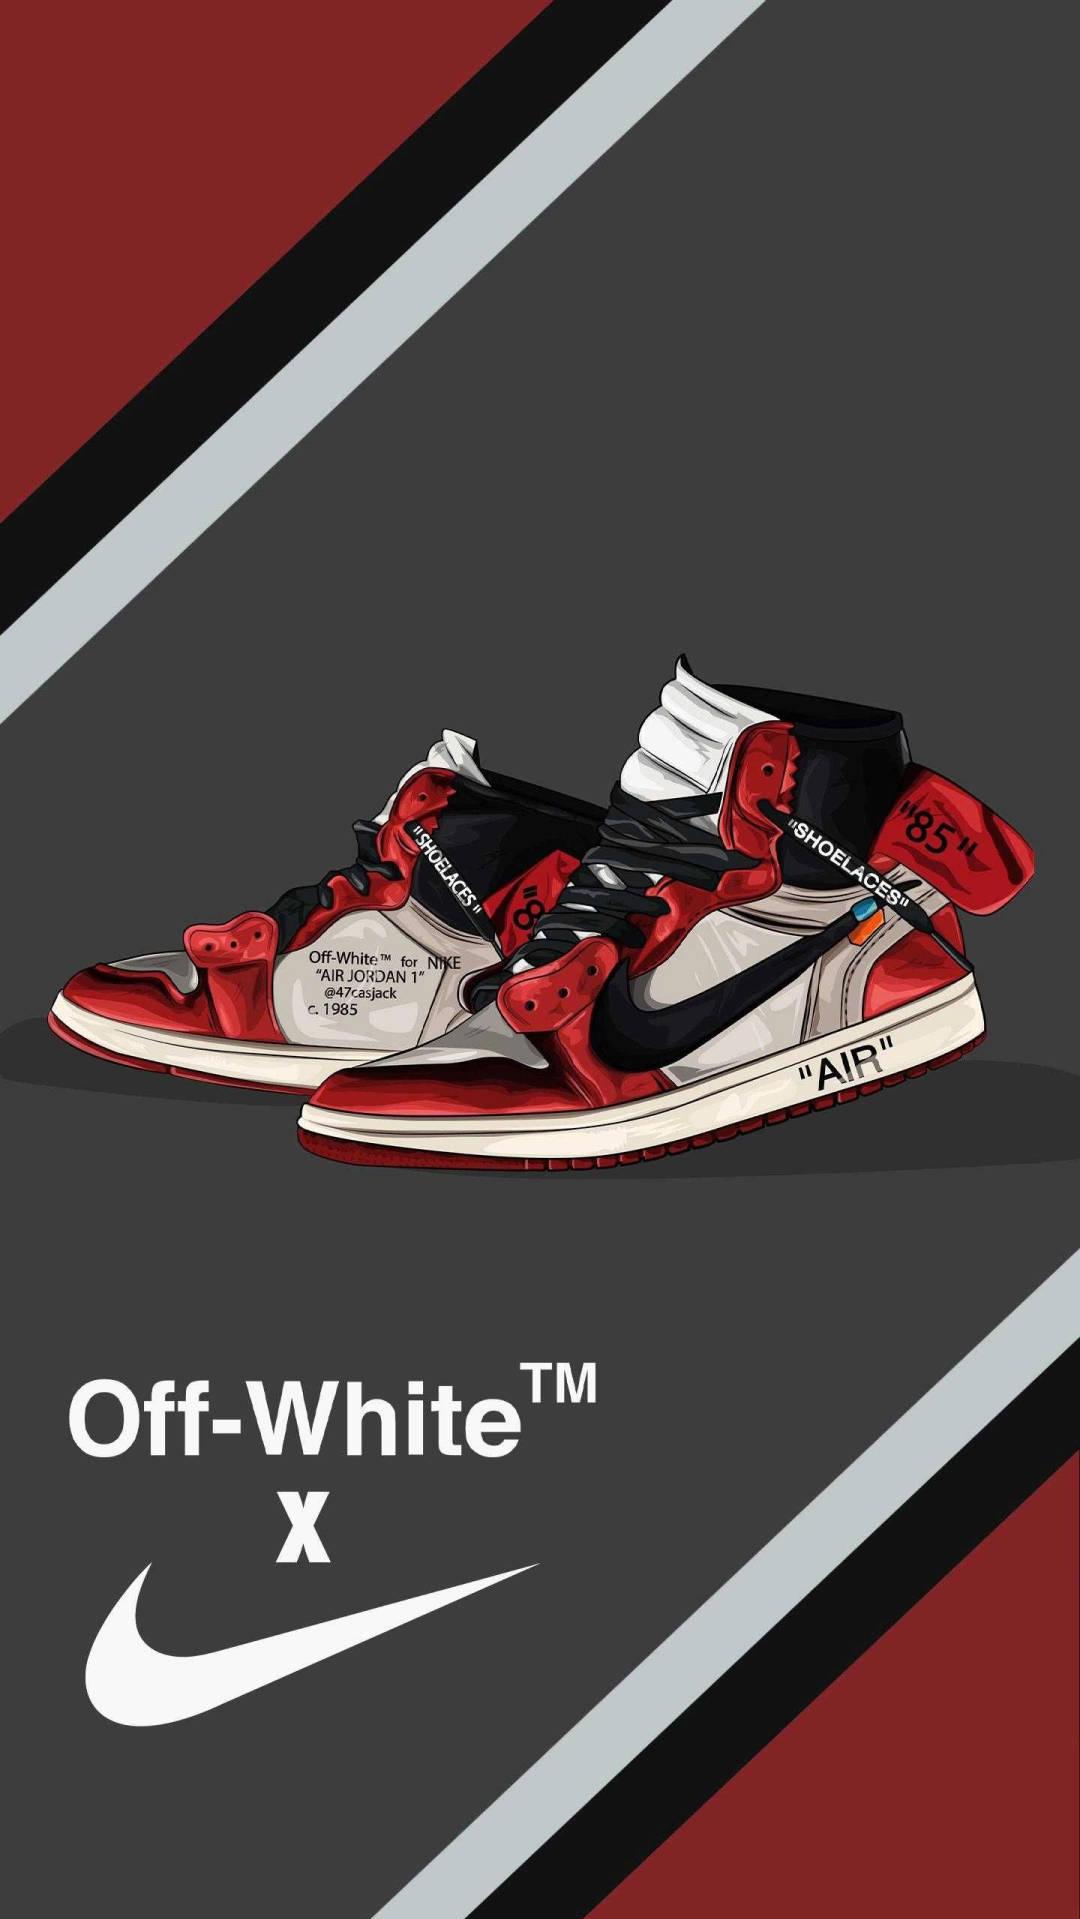 Off White X Nike Shoes Wallpaper